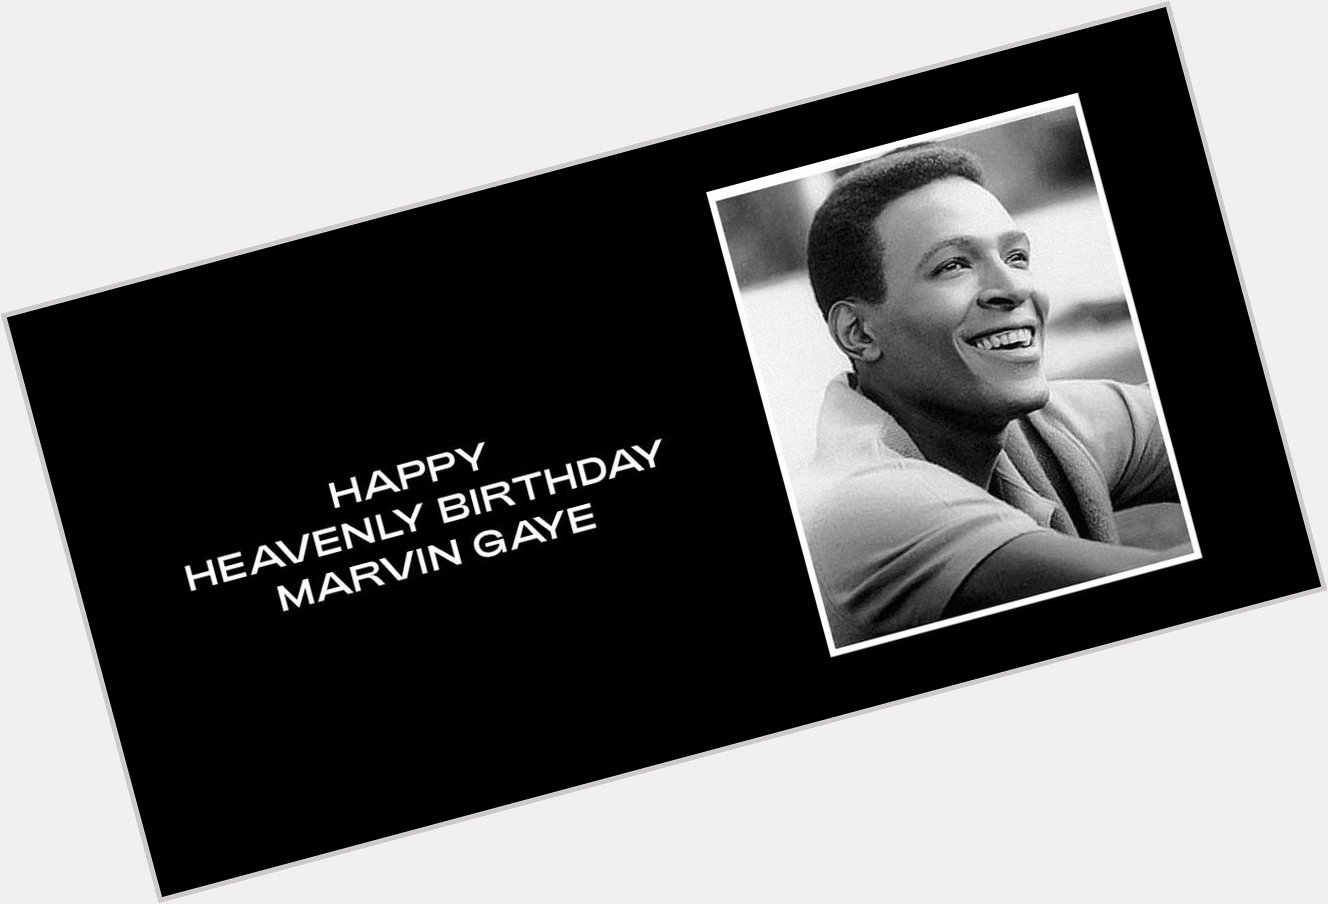 Happy Heavenly Birthday Marvin Gaye via 